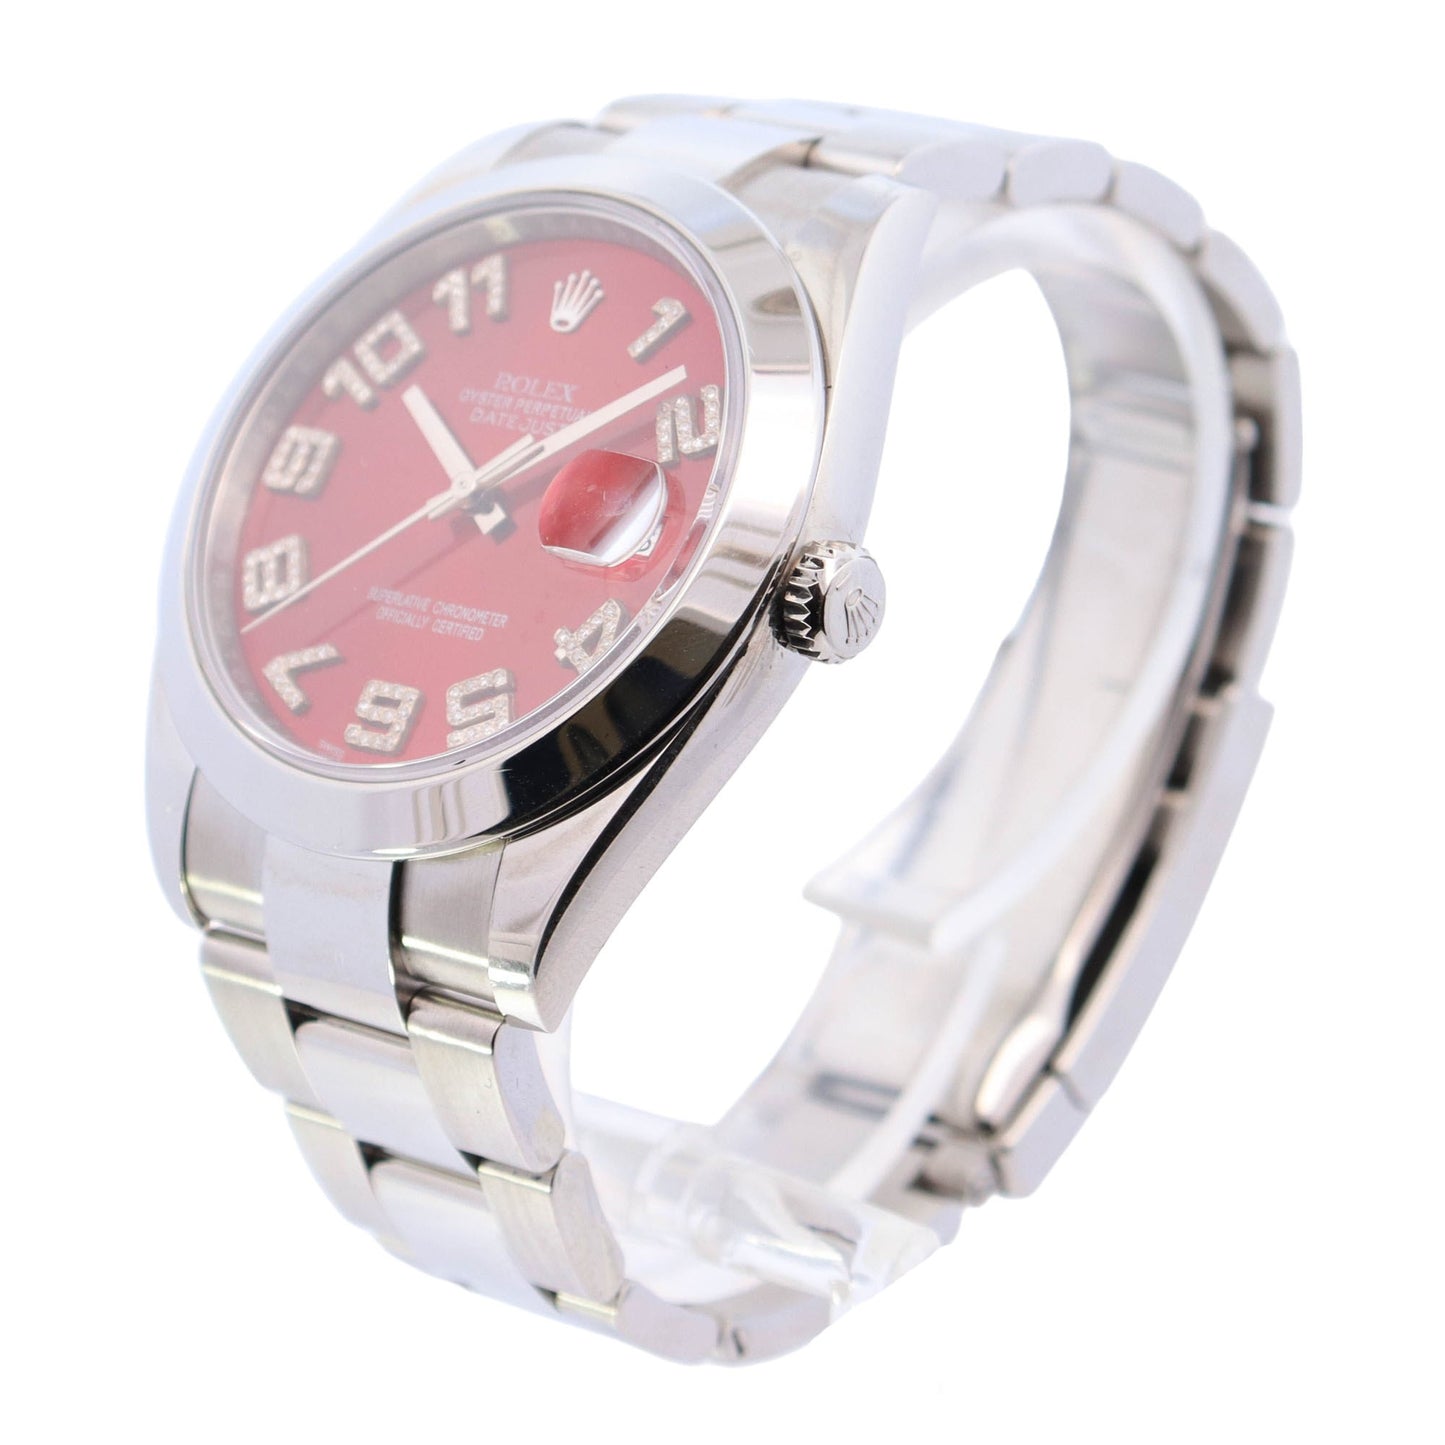 Rolex Datejust 41mm Stainless Steel Custom Red Roman Dial Watch Reference# 126300 - Happy Jewelers Fine Jewelry Lifetime Warranty